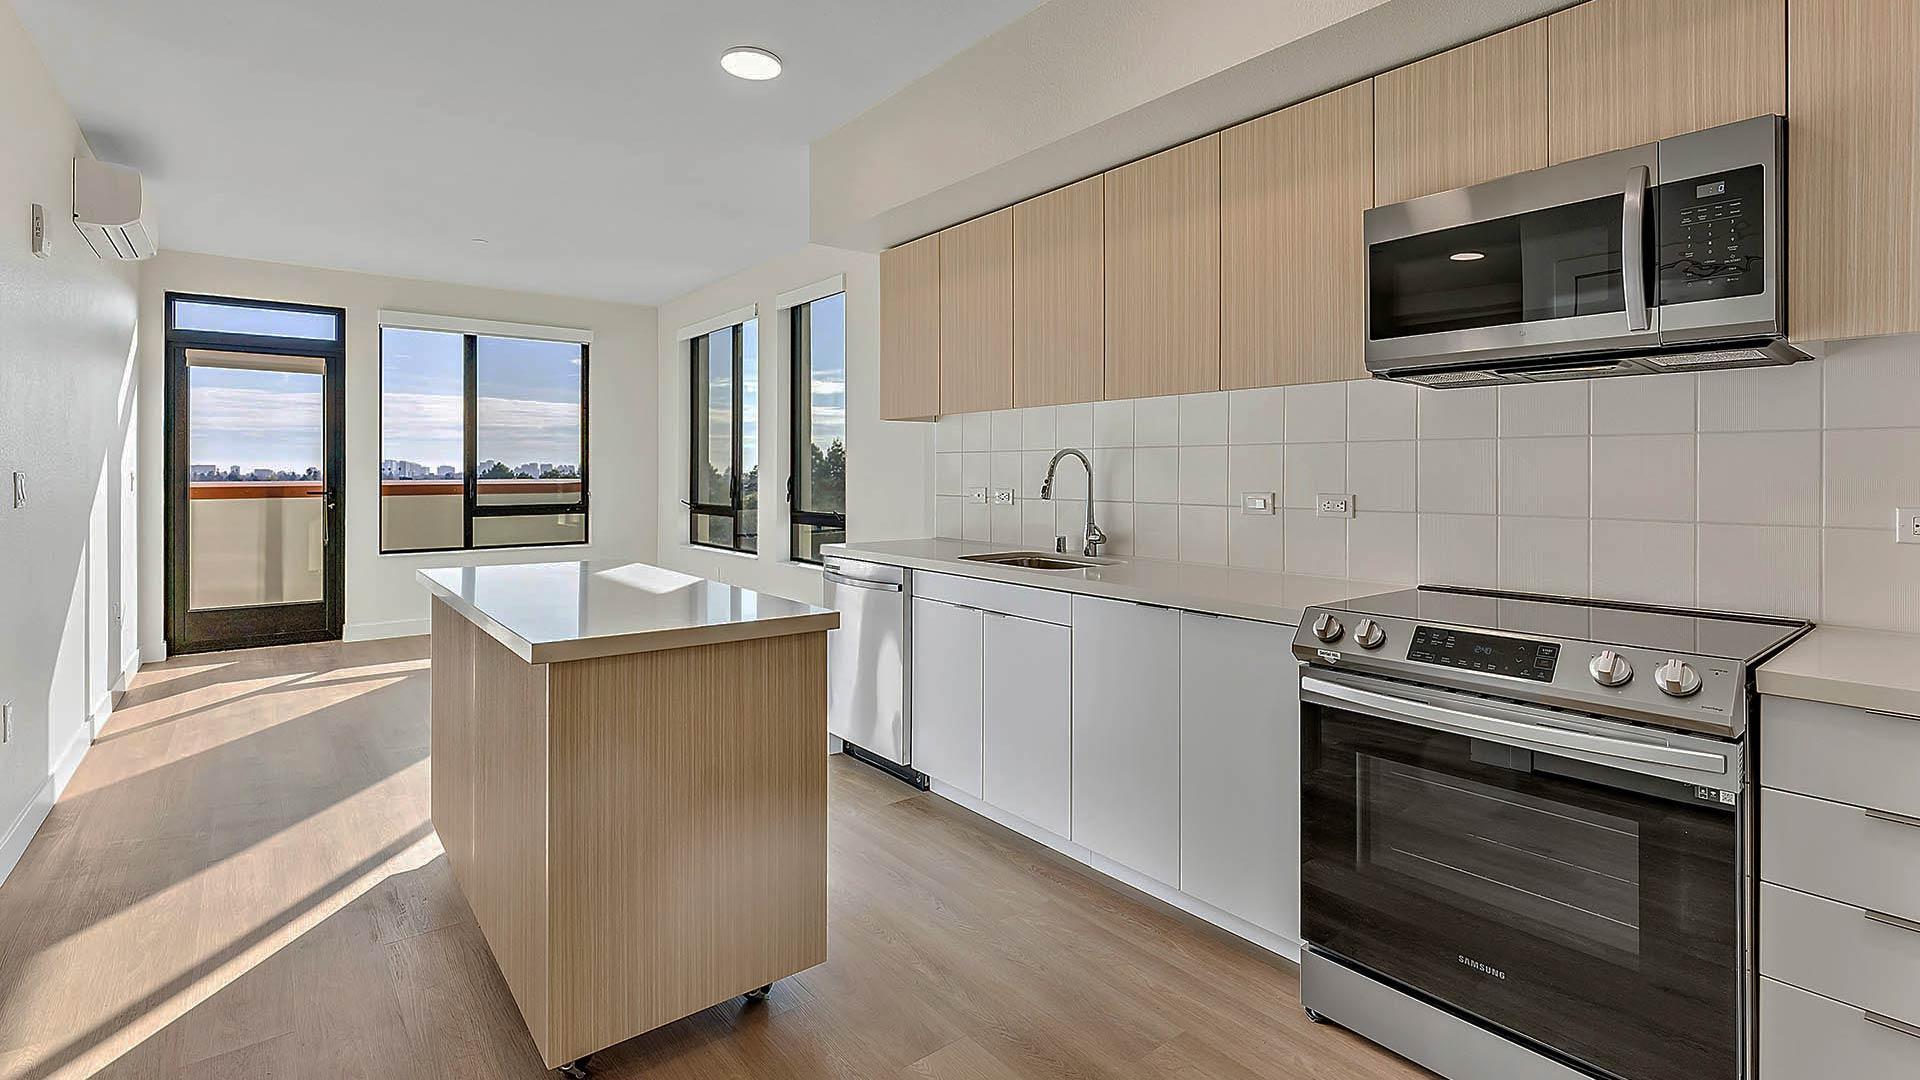 Blake apartments b5 floorplan kitchen view 2